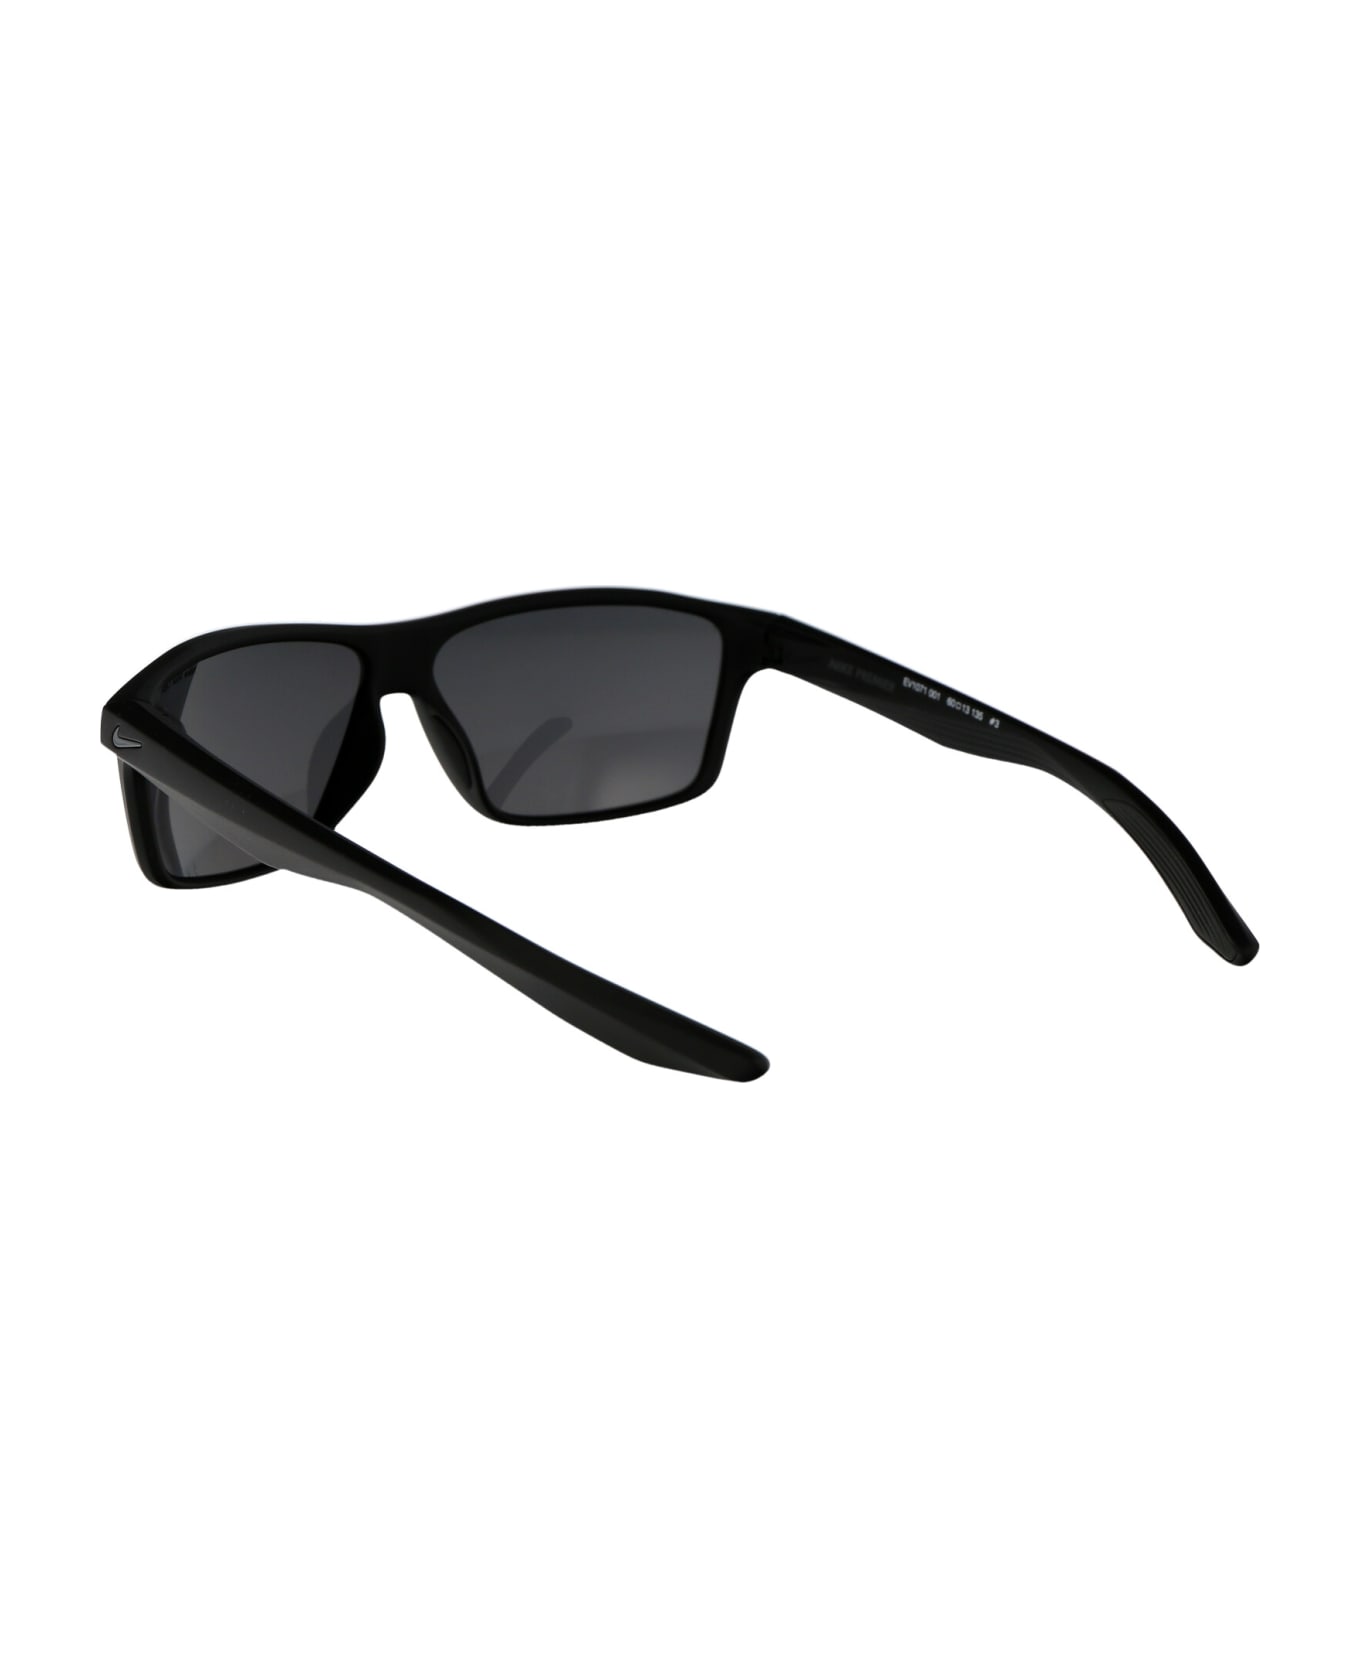 Nike Premier Sunglasses - 001 DARK GREY BLACK/ ANTHRACITE